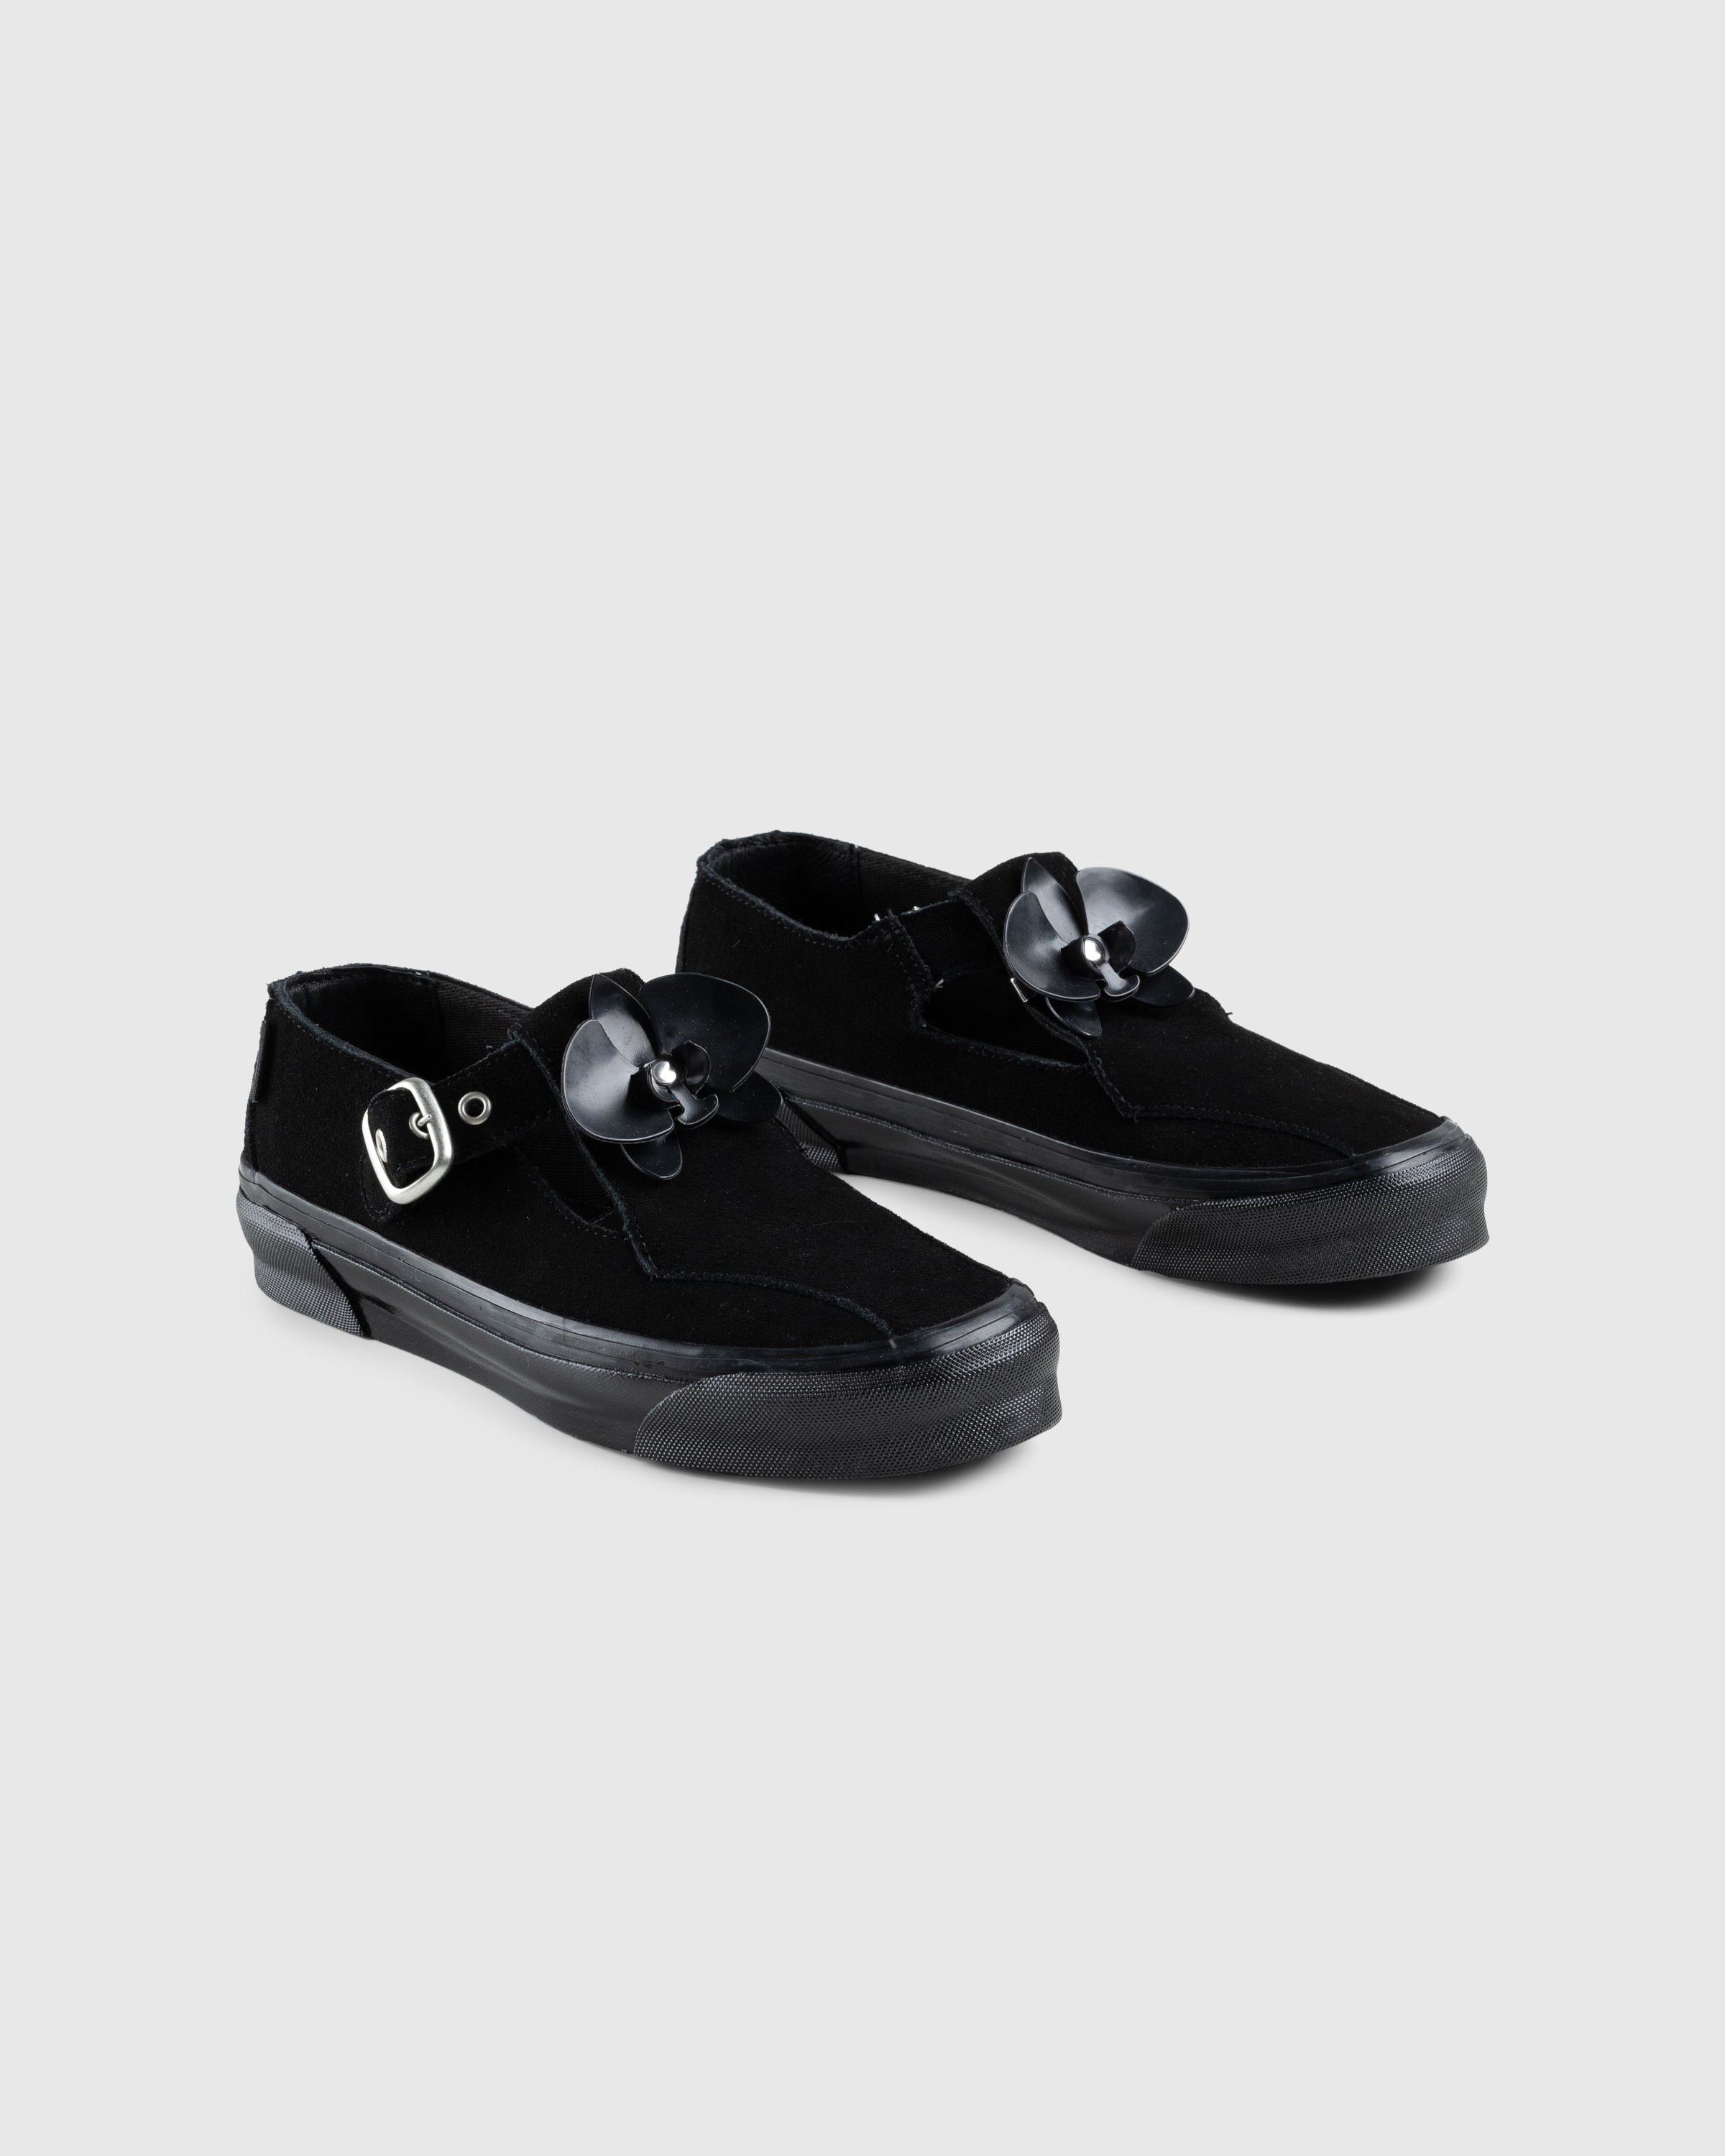 Vans – OG Style 93 LX Black - Sneakers - Black - Image 4